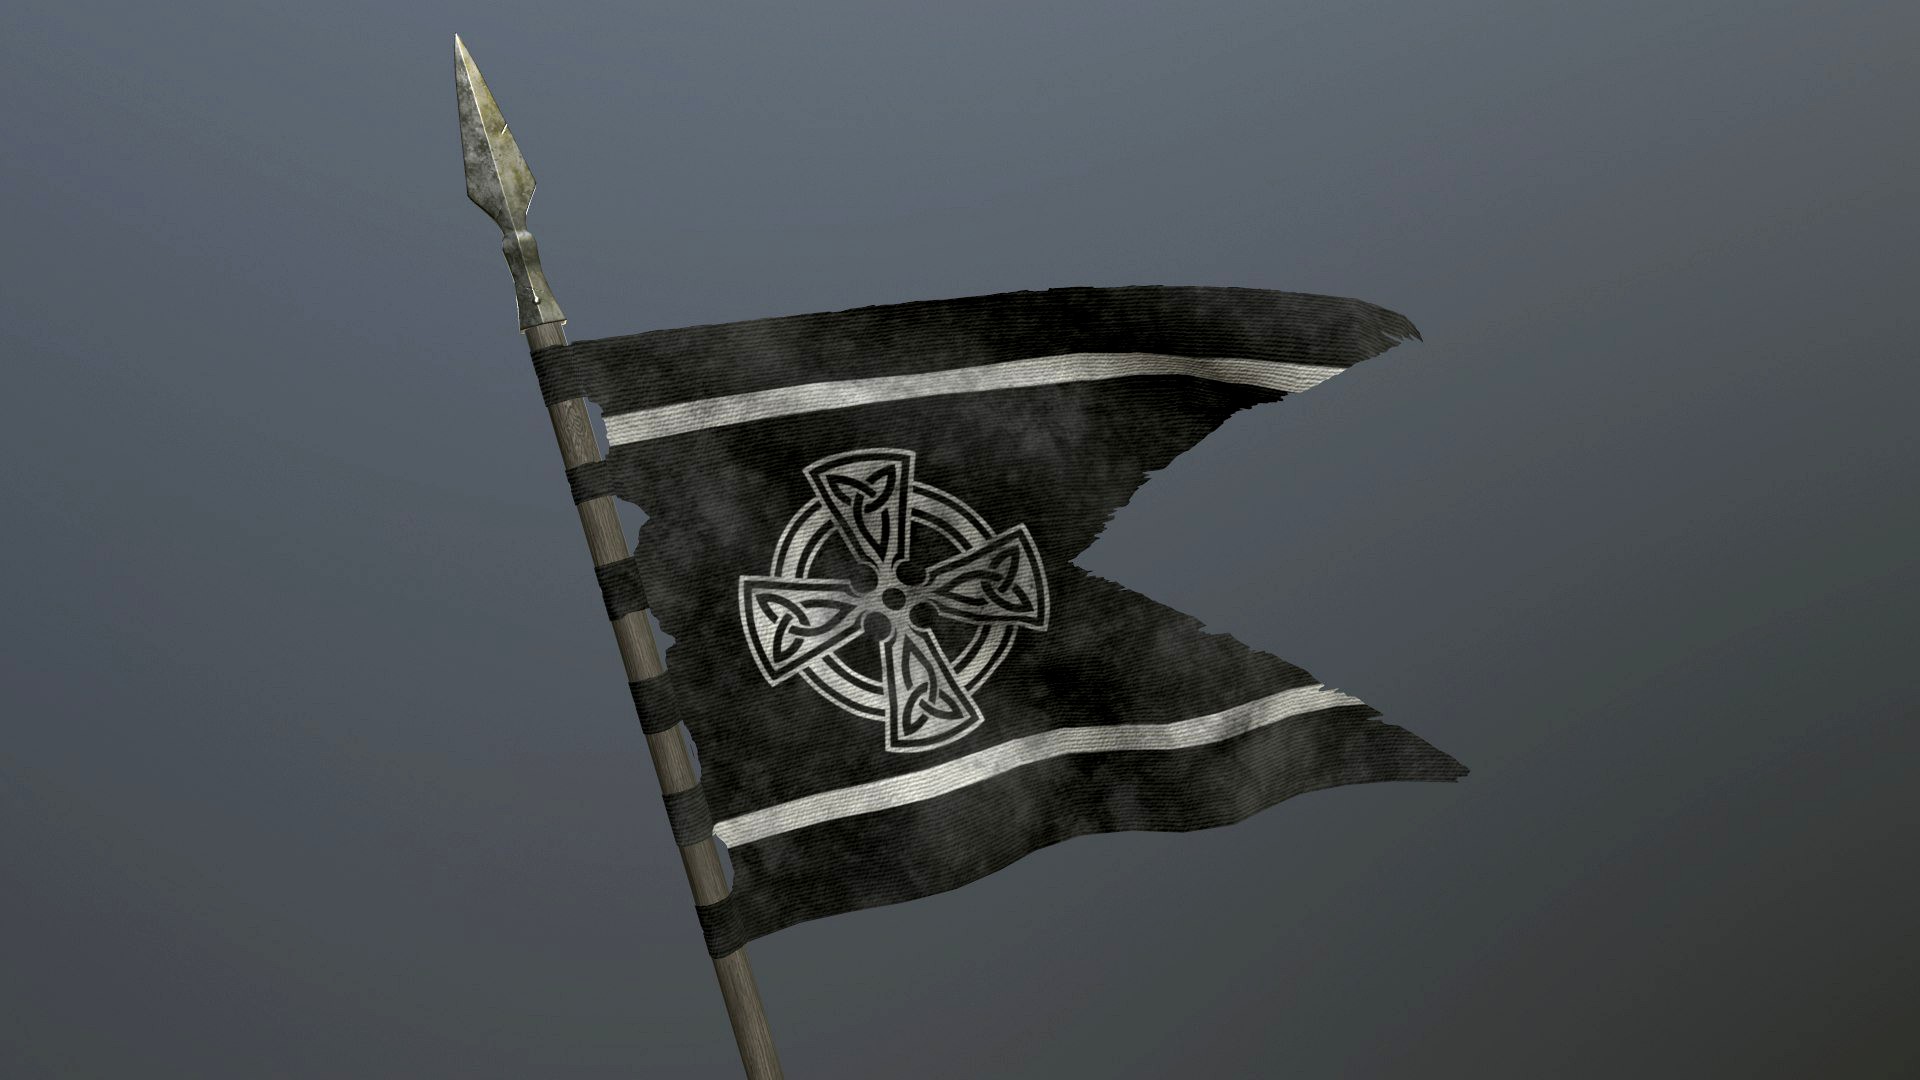 Medieval flag on the spear